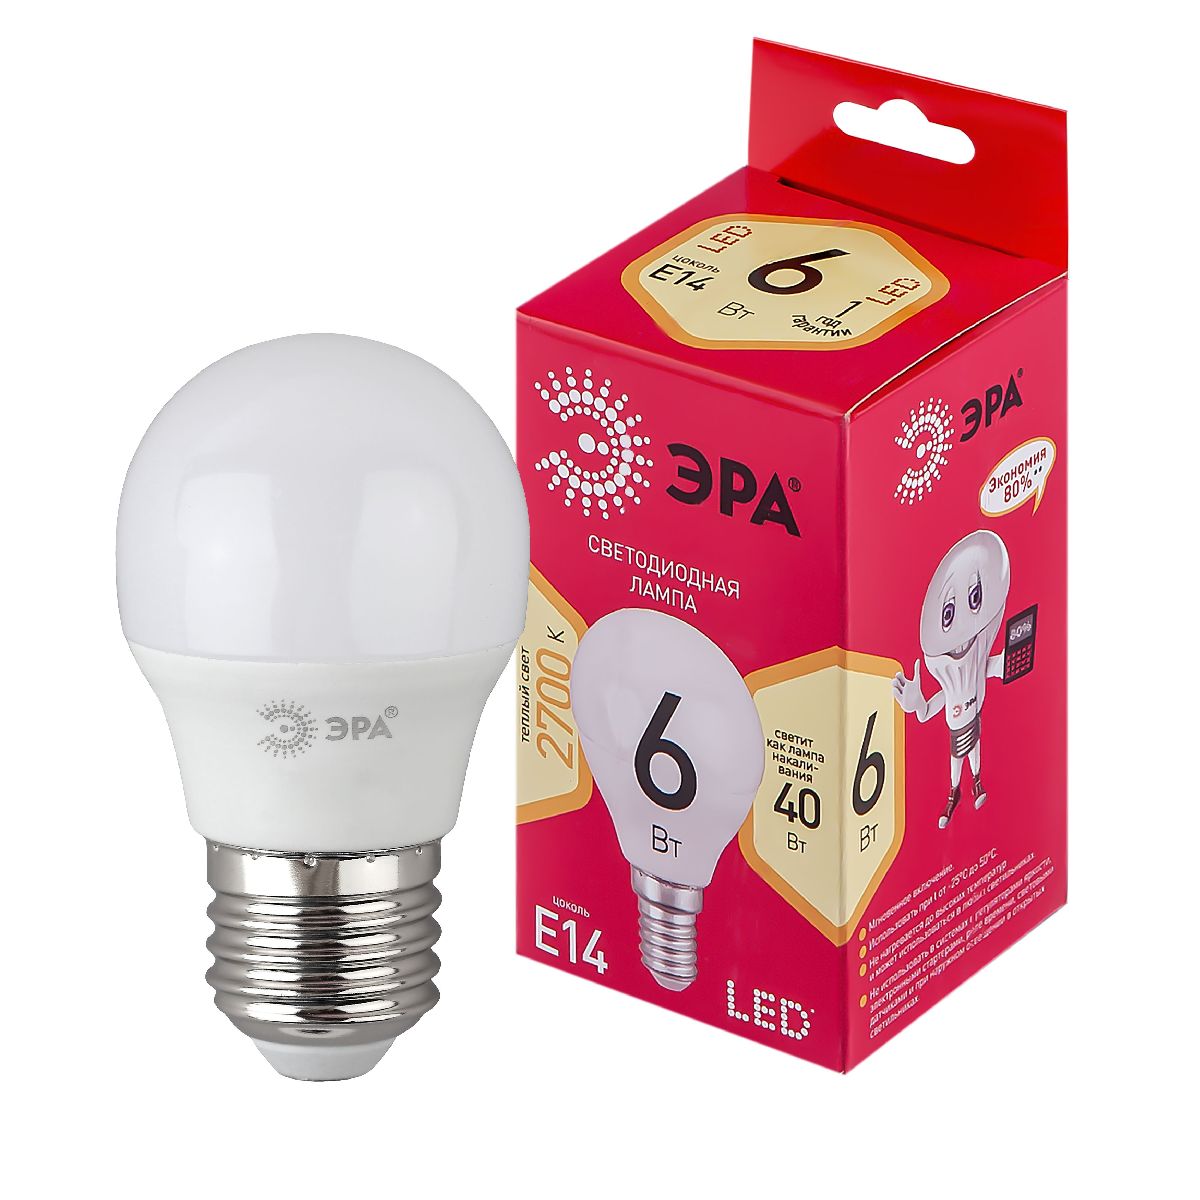 Лампа светодиодная Эра E14 6W 2700K LED P45-6W-827-E14 R Б0051058